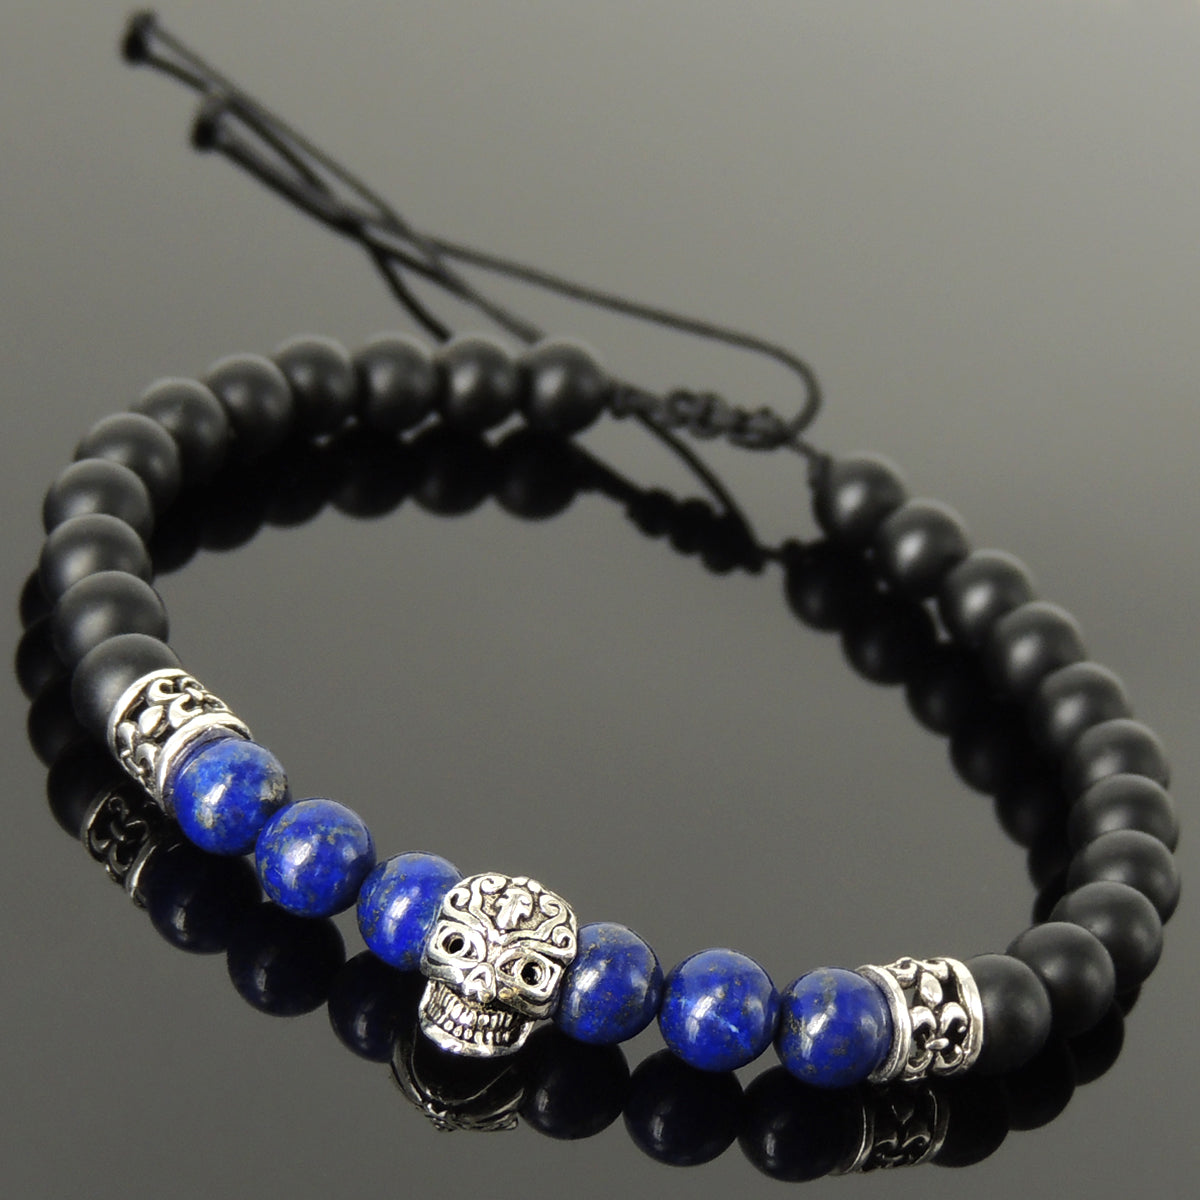 Handmade Braided Sugar Skull Inspired Bracelet - Lapis Lazuli & Matte Black Onyx Gemstones, Adjustable Drawstring, S925 Sterling Silver Beads BR1601